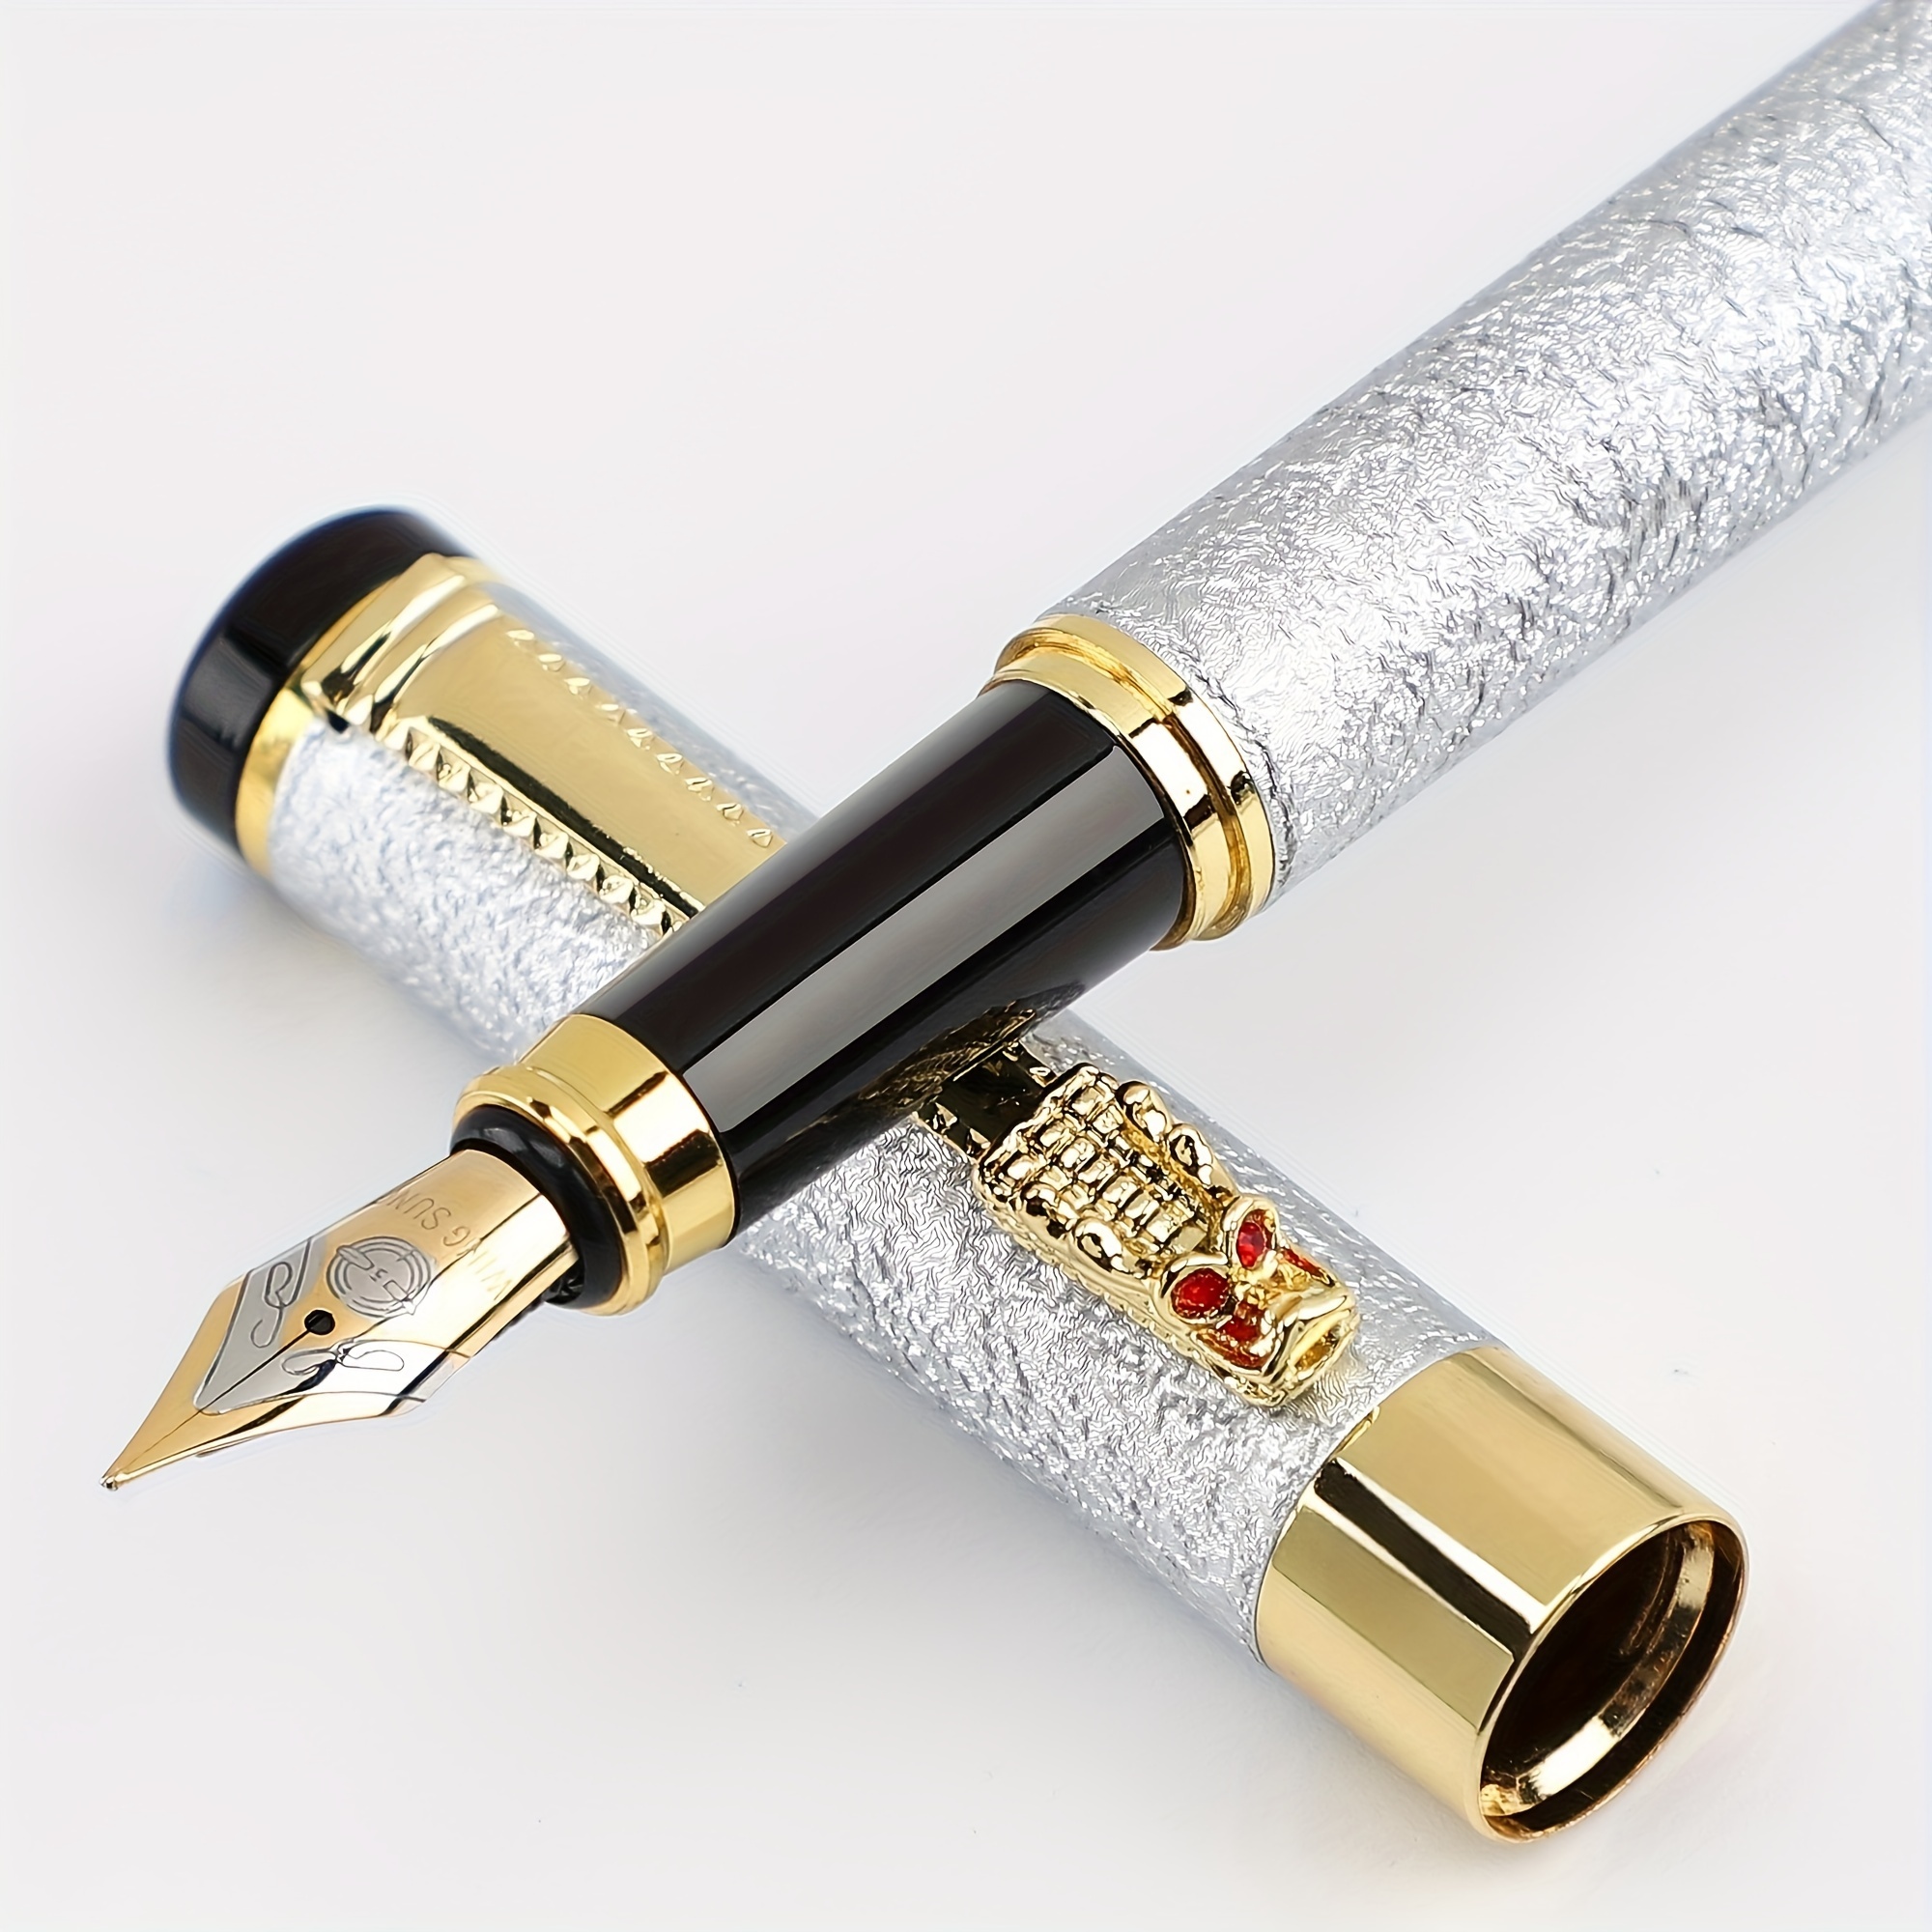 

1pc Matte Metal Penholder Fountain Pen Daily Writing Business Office Iridium Nib 0.5mm Pen For Practice Calligraphy